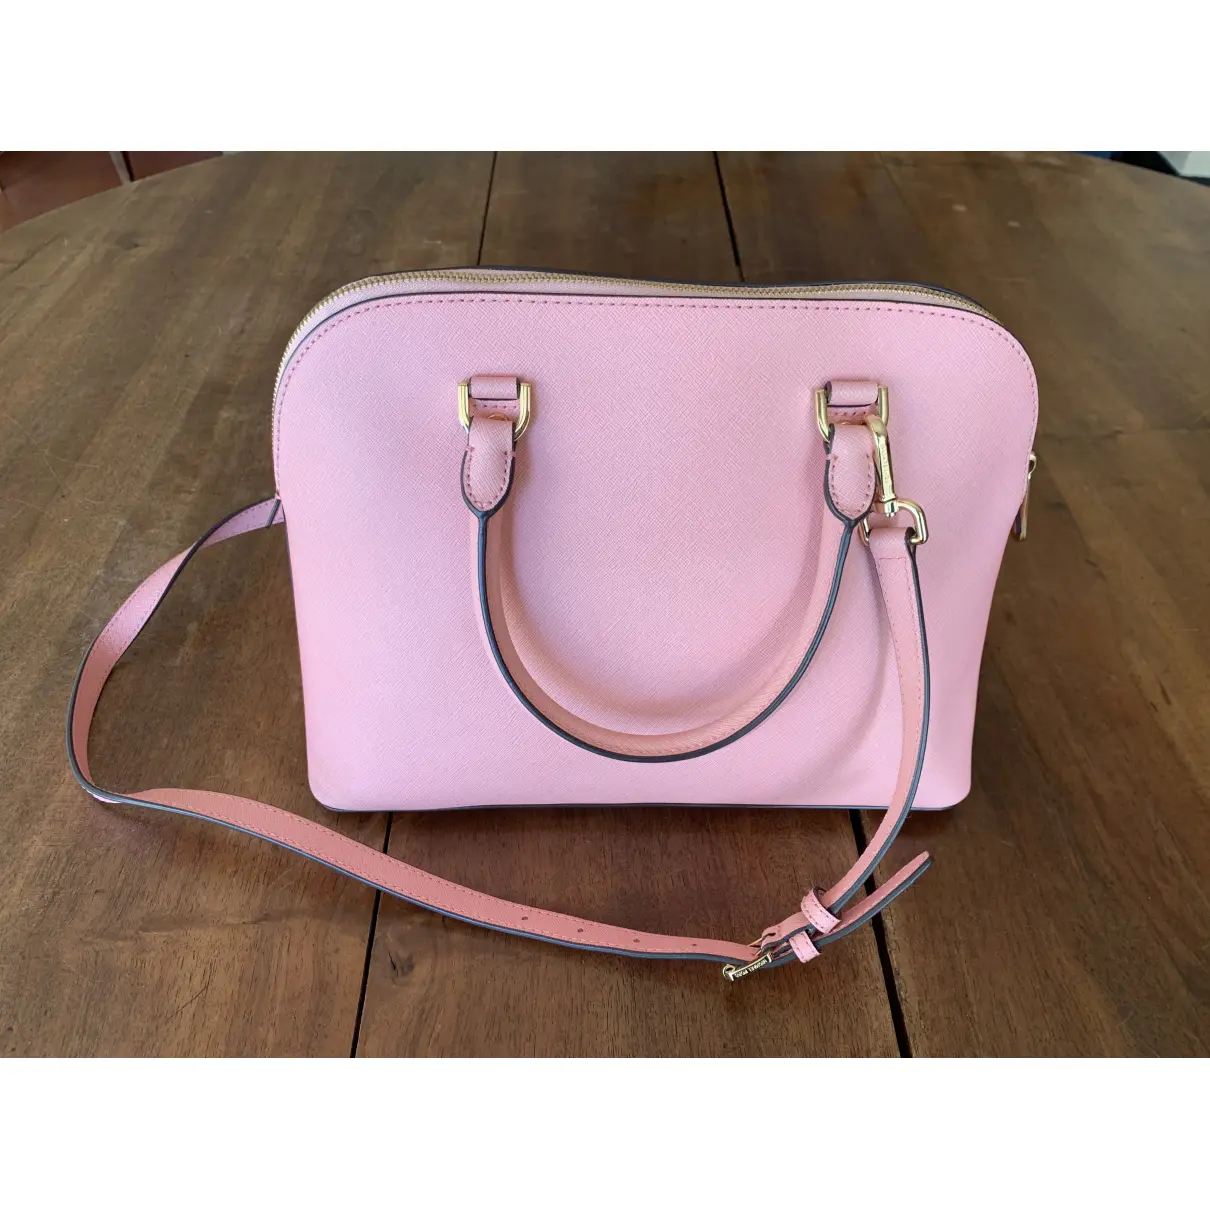 Buy Michael Kors Cindy leather handbag online